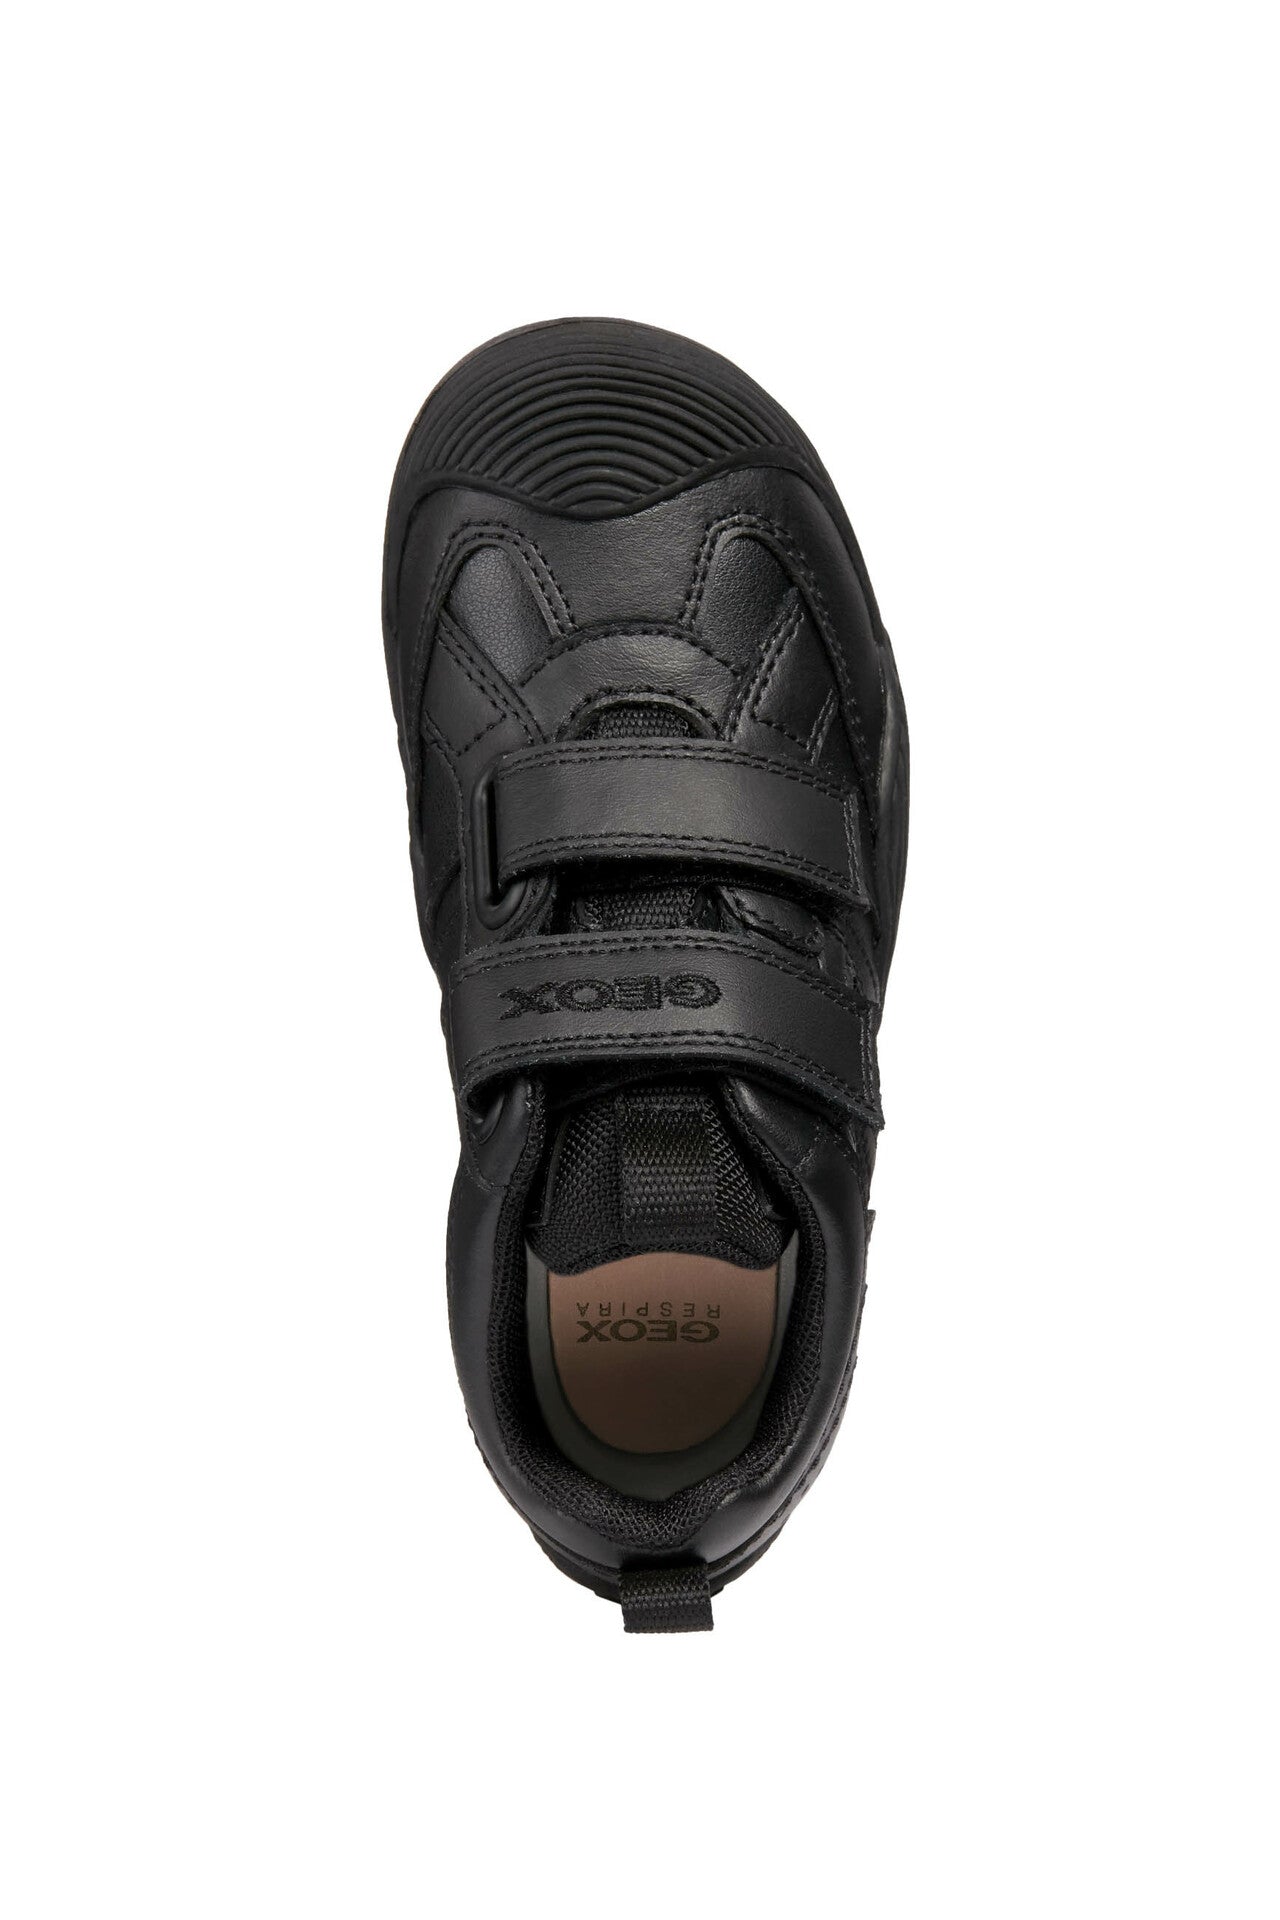 Savage A Black Leather Boys School Shoe